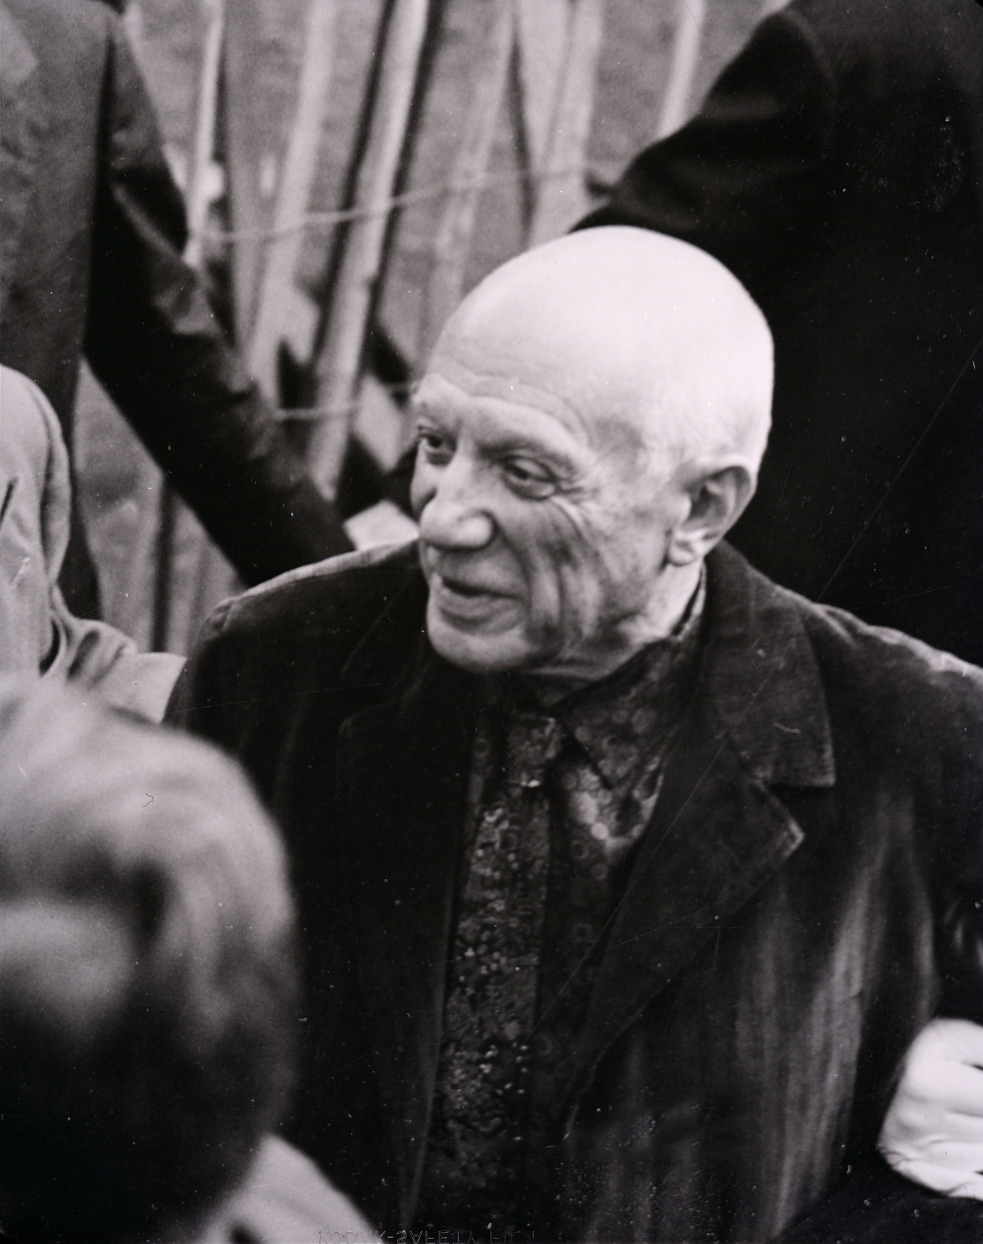 Pablo Picasso pictured in 1953.